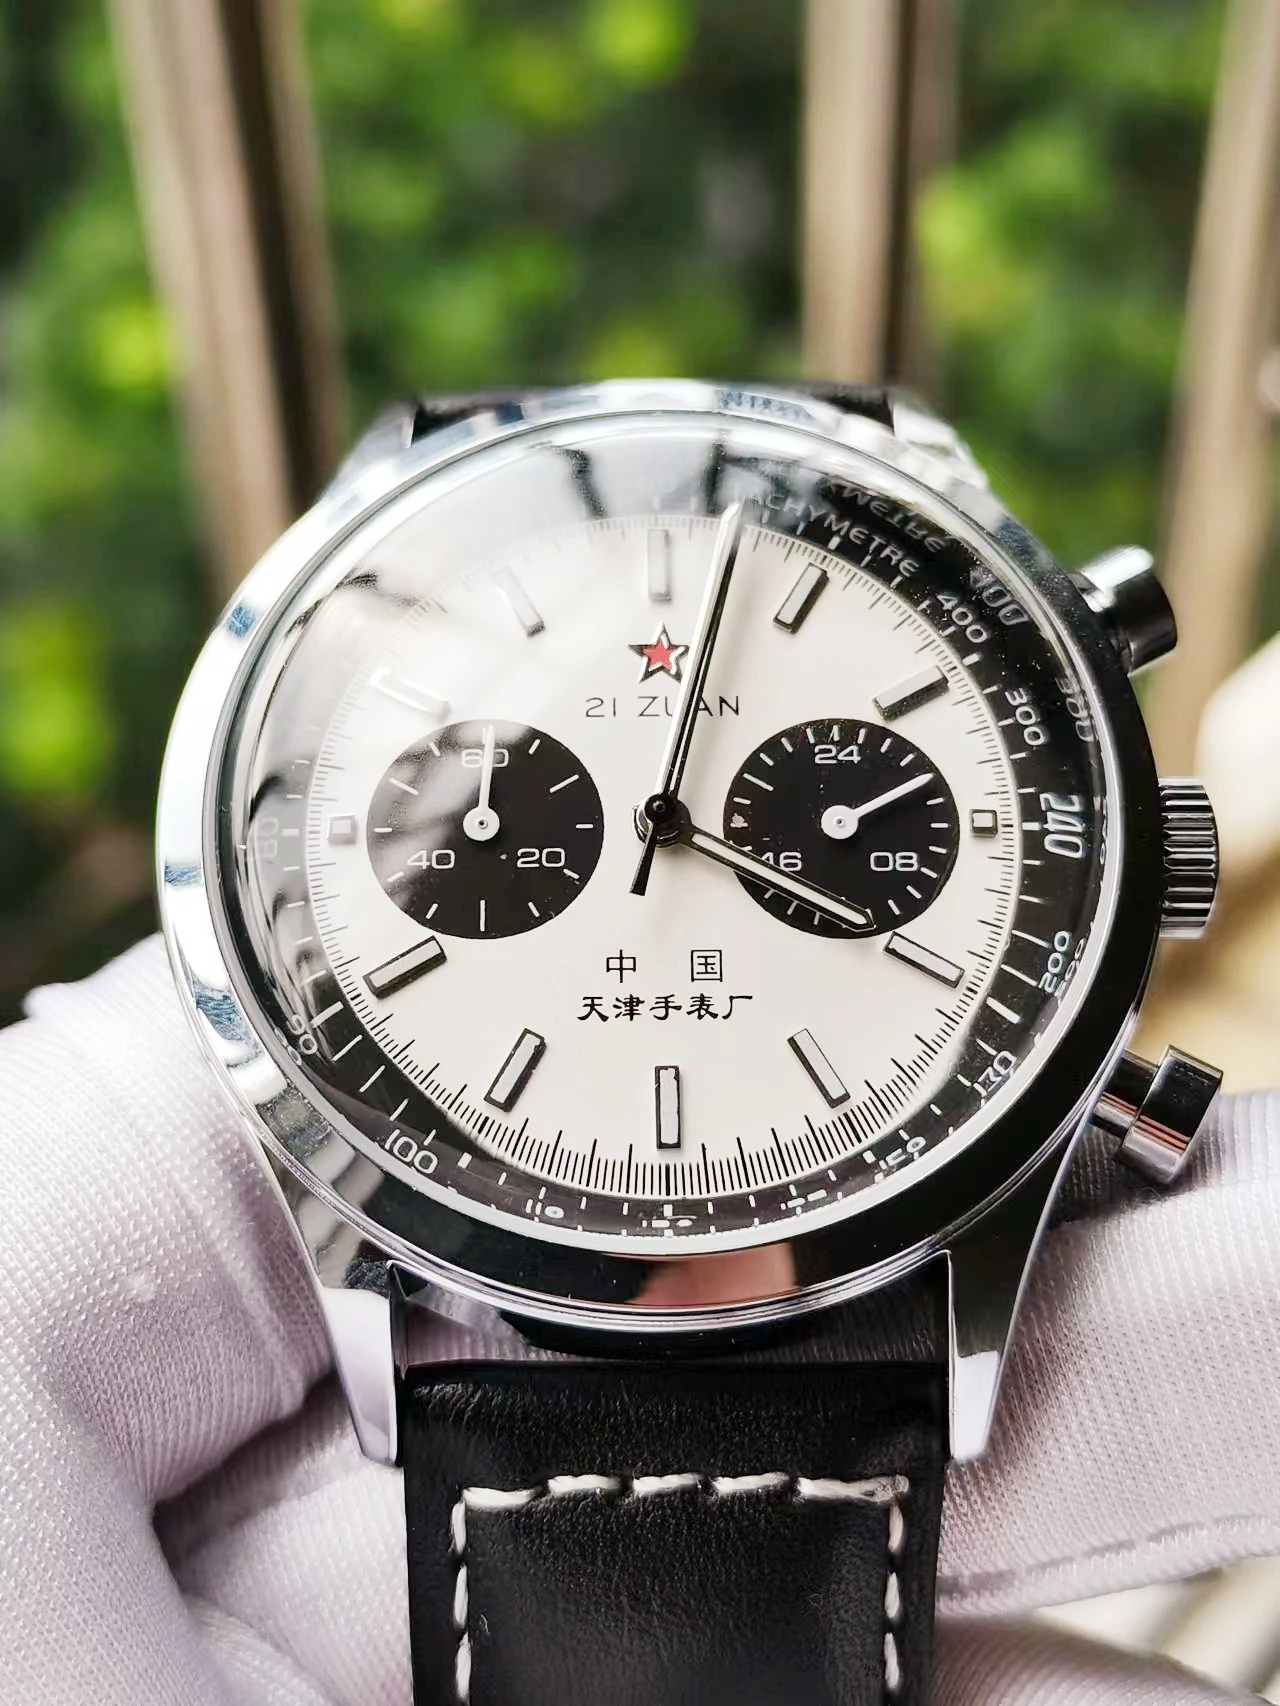 

1963 Watch Pilot Quartz 42mm Dial 5 Hand Display Flight Aviation Military Wristwatch Retro Personality Sport Tough Guy Men Clock